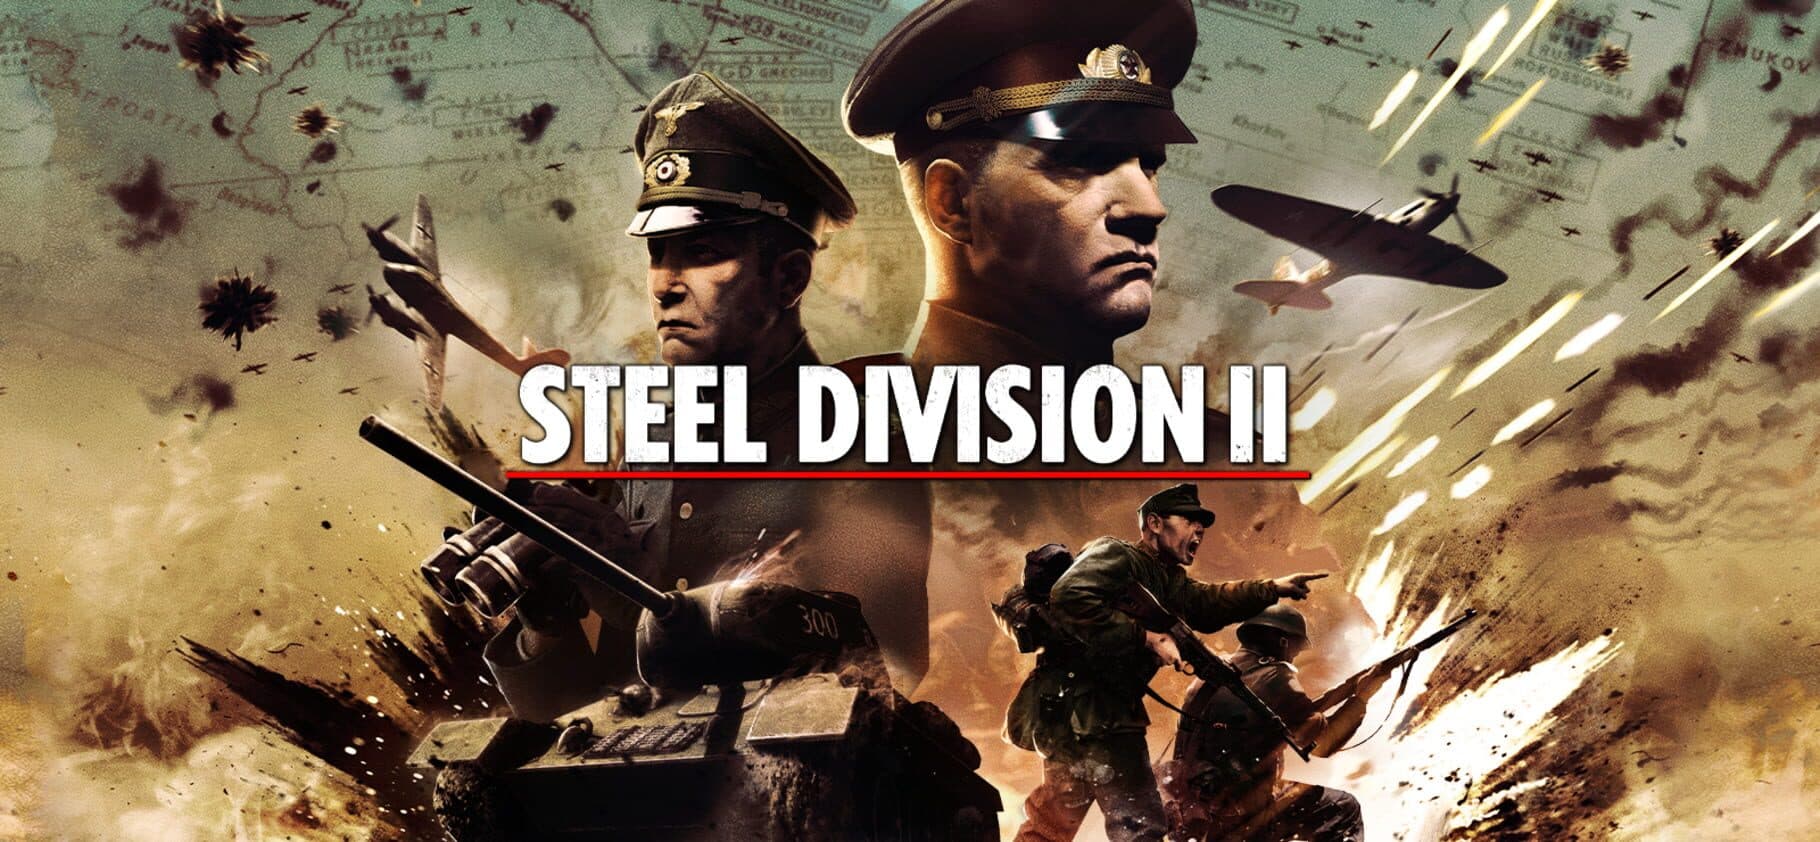 Steel Division 2: Reinforcement Pack #9 - Army General Versus Image